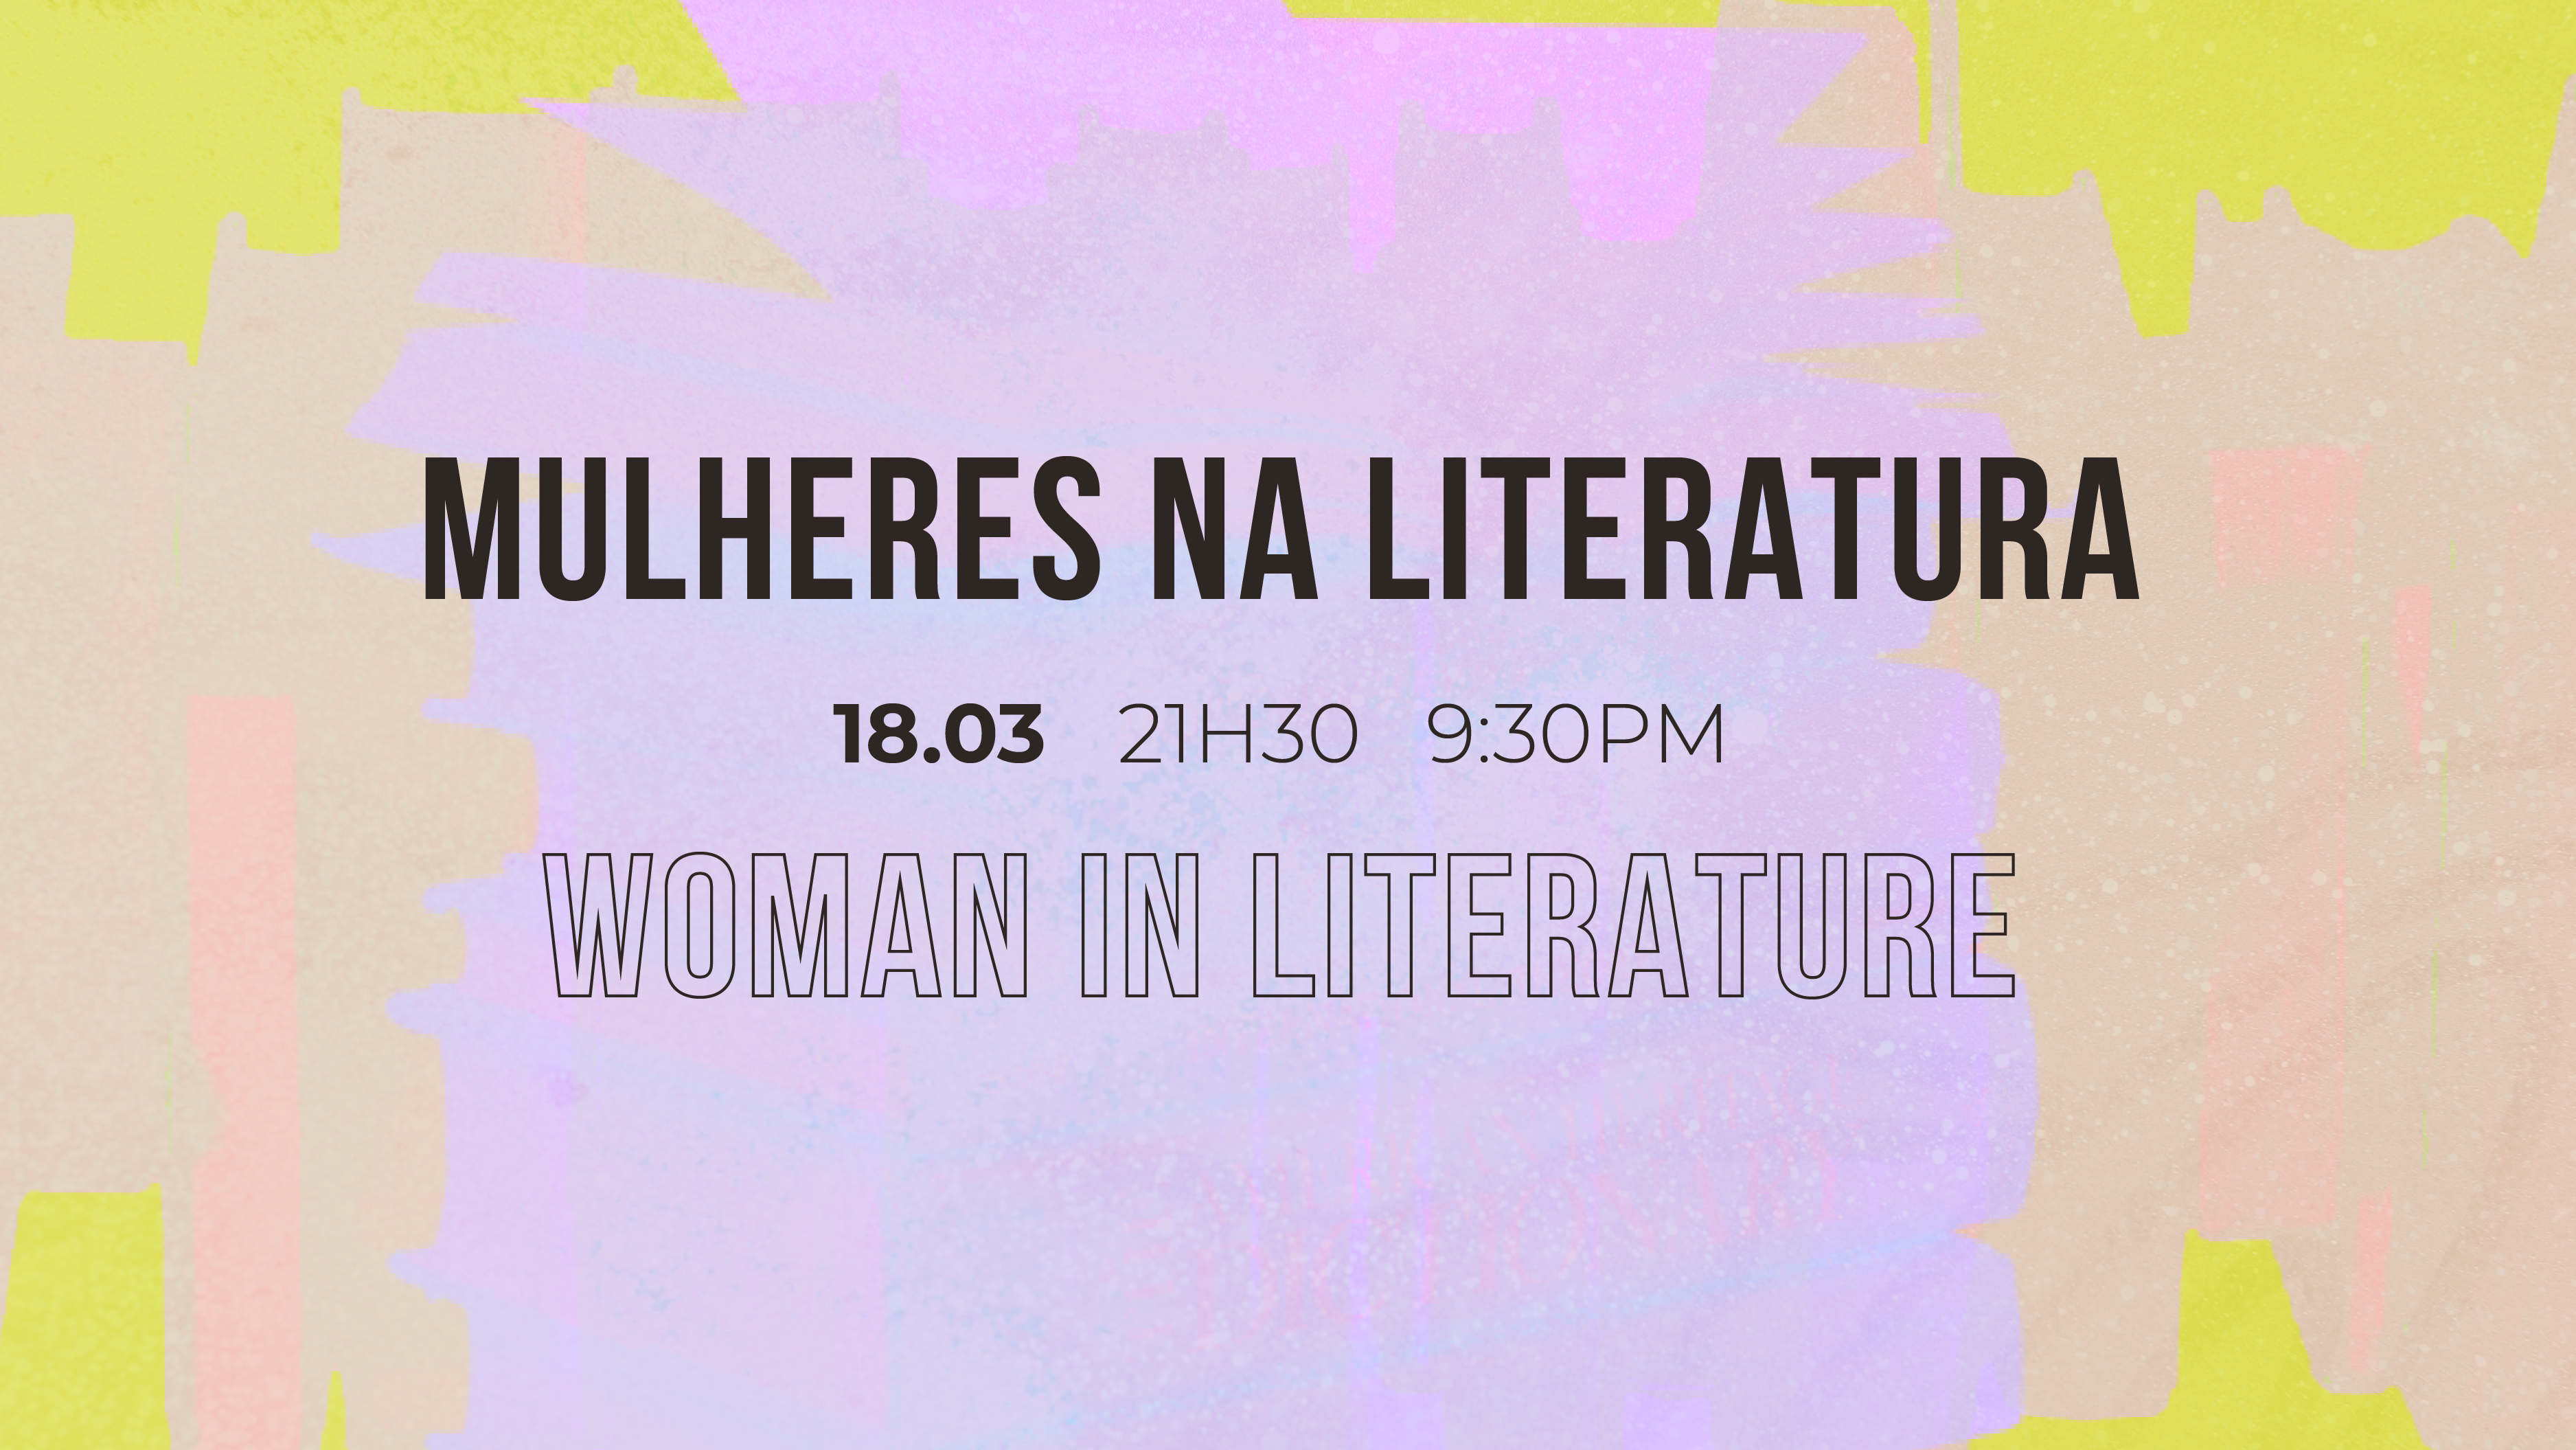 Sessão “Mulheres na Literatura”